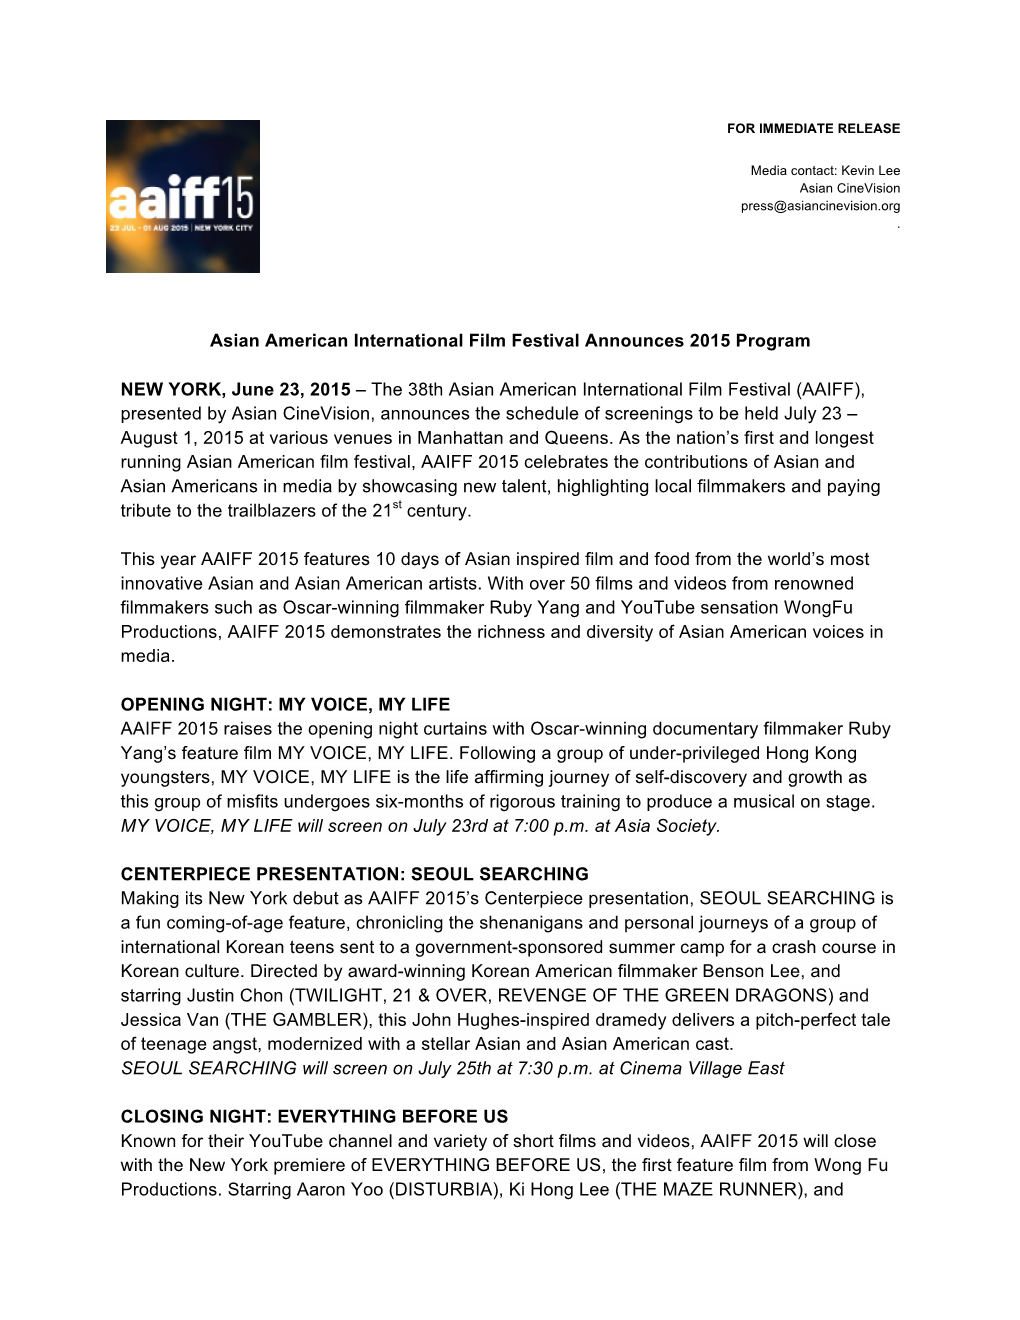 Asian American International Film Festival Announces 2015 Program